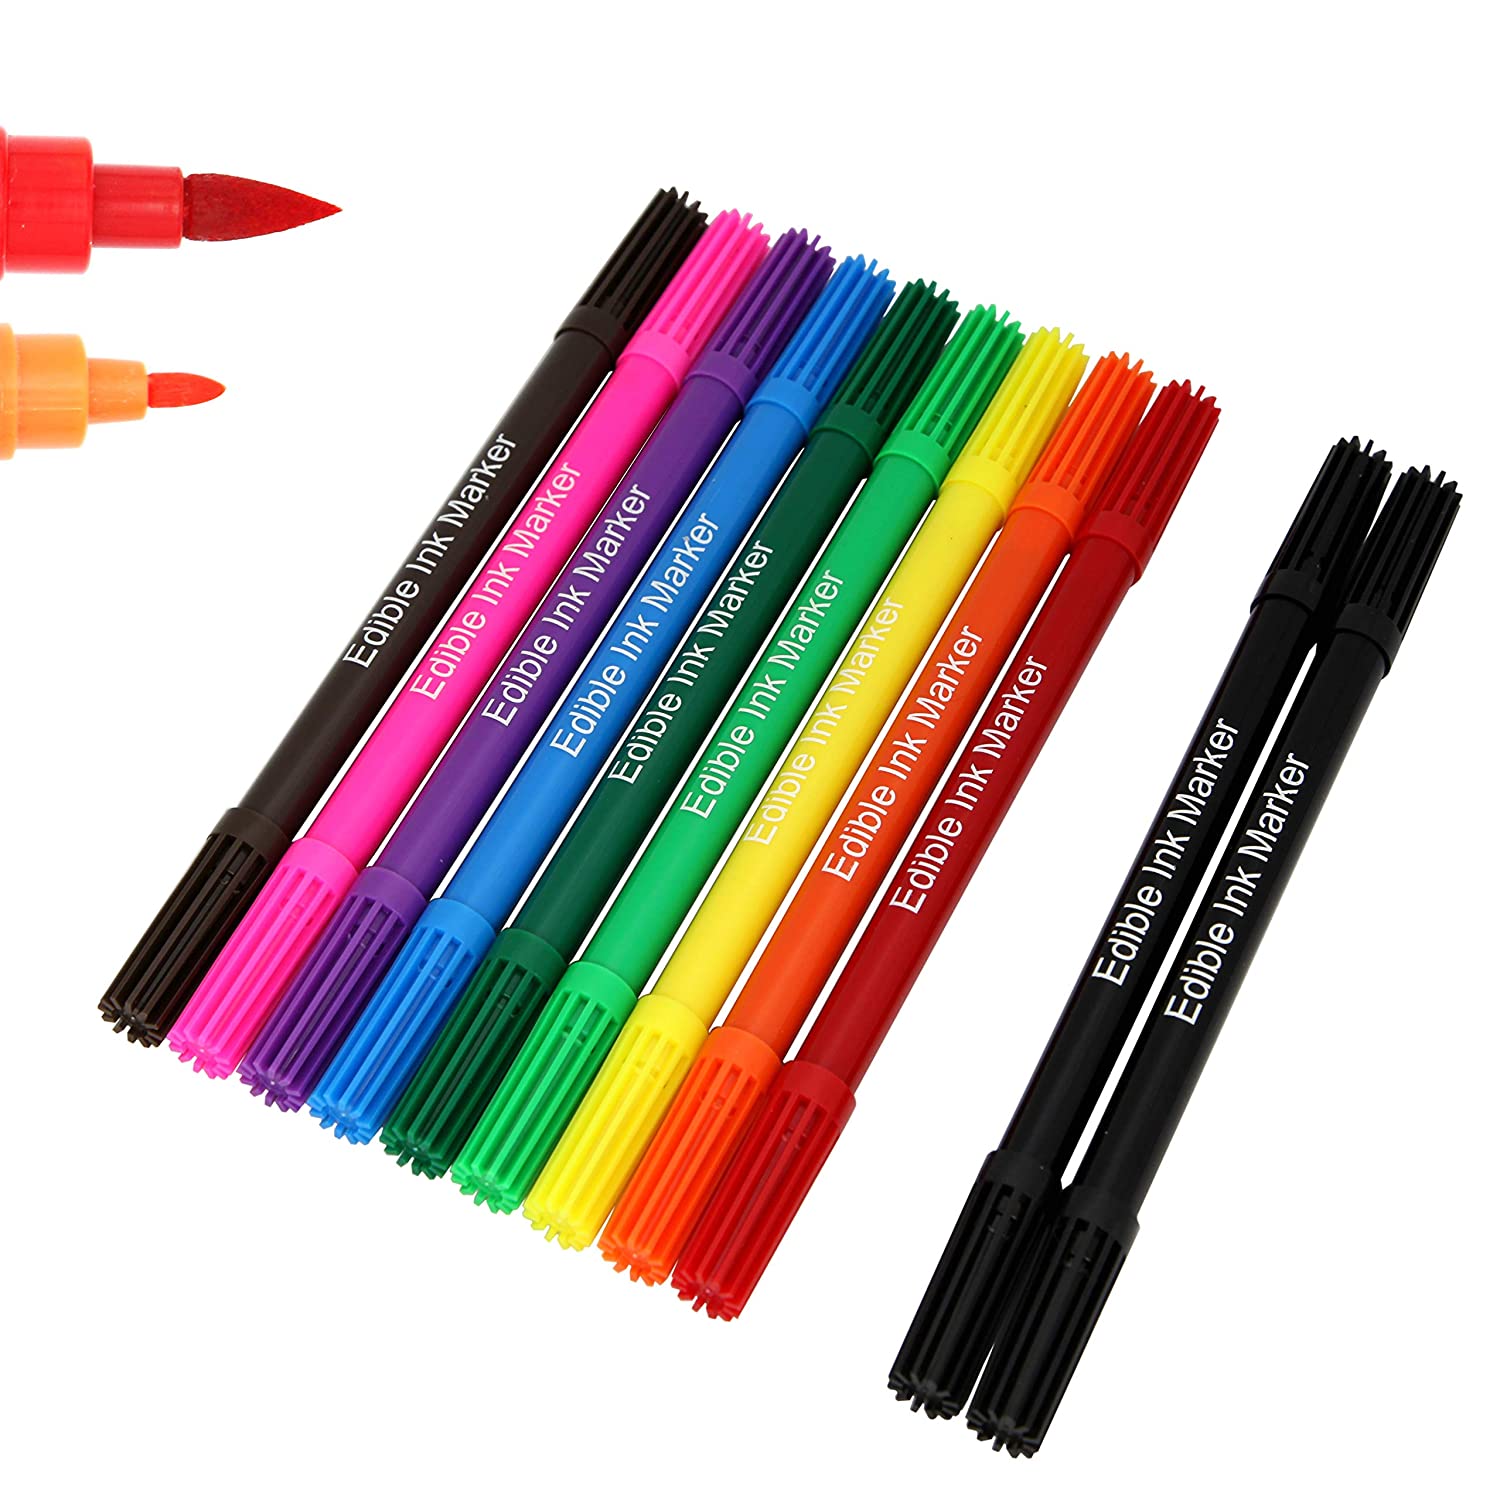 EdibleInk Dual-Tip Food Coloring Pens Cookie Decorating Kit, 11-Piece